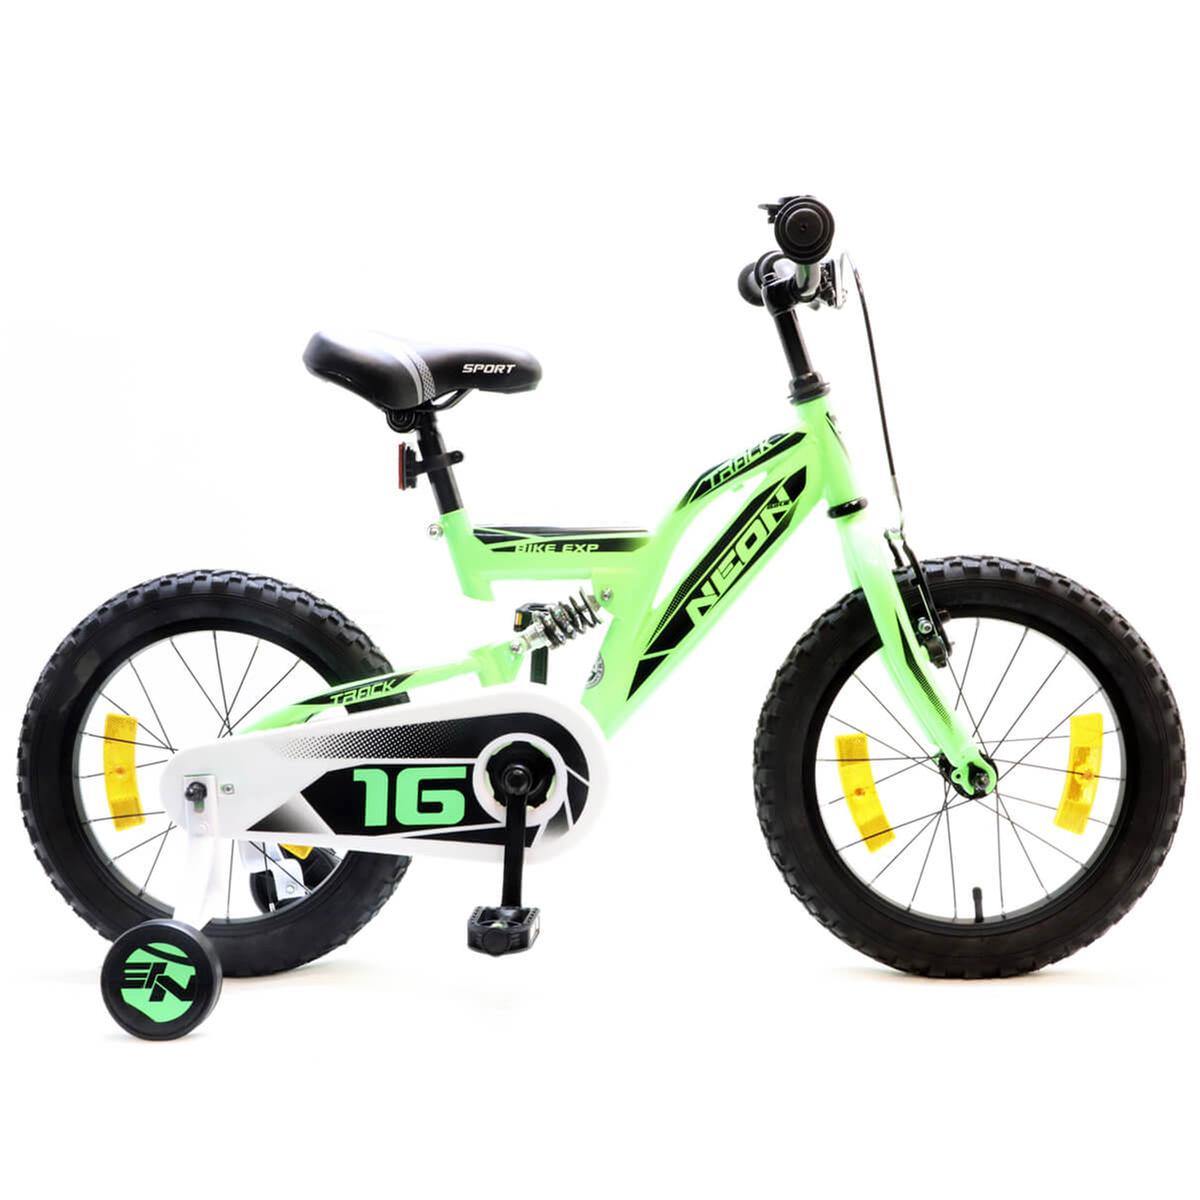 Bicicleta Neon Track 16 pulgadas | Bicis 16' Aventura | Toys"R"Us España